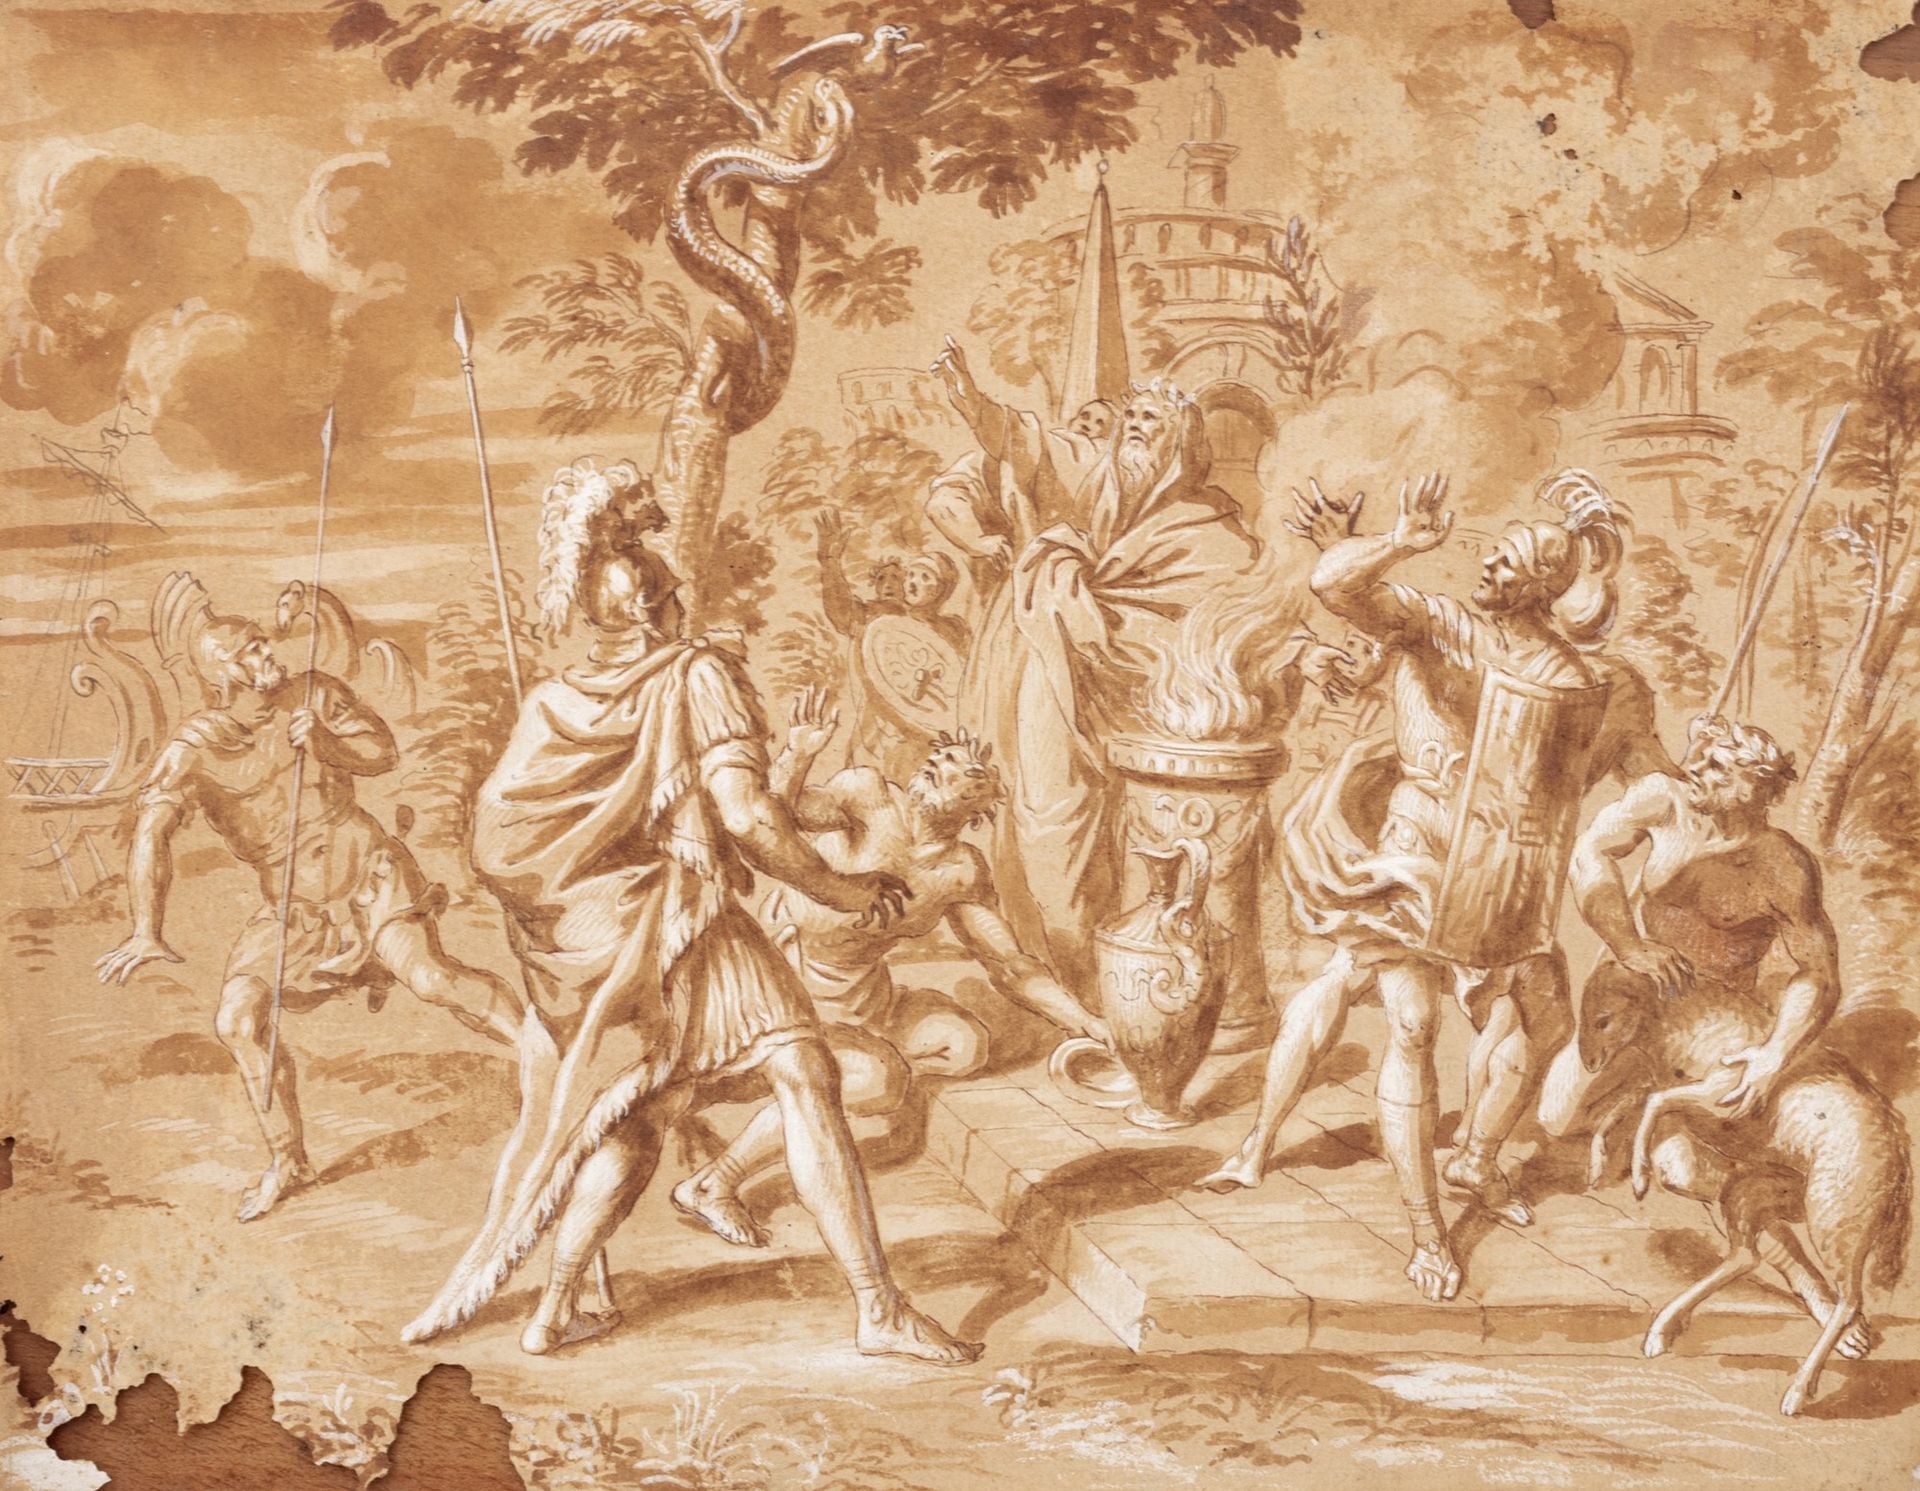 Null Scuola dell'Italia centrale, secolo XVII - Moses und die eherne Schlange

B&hellip;